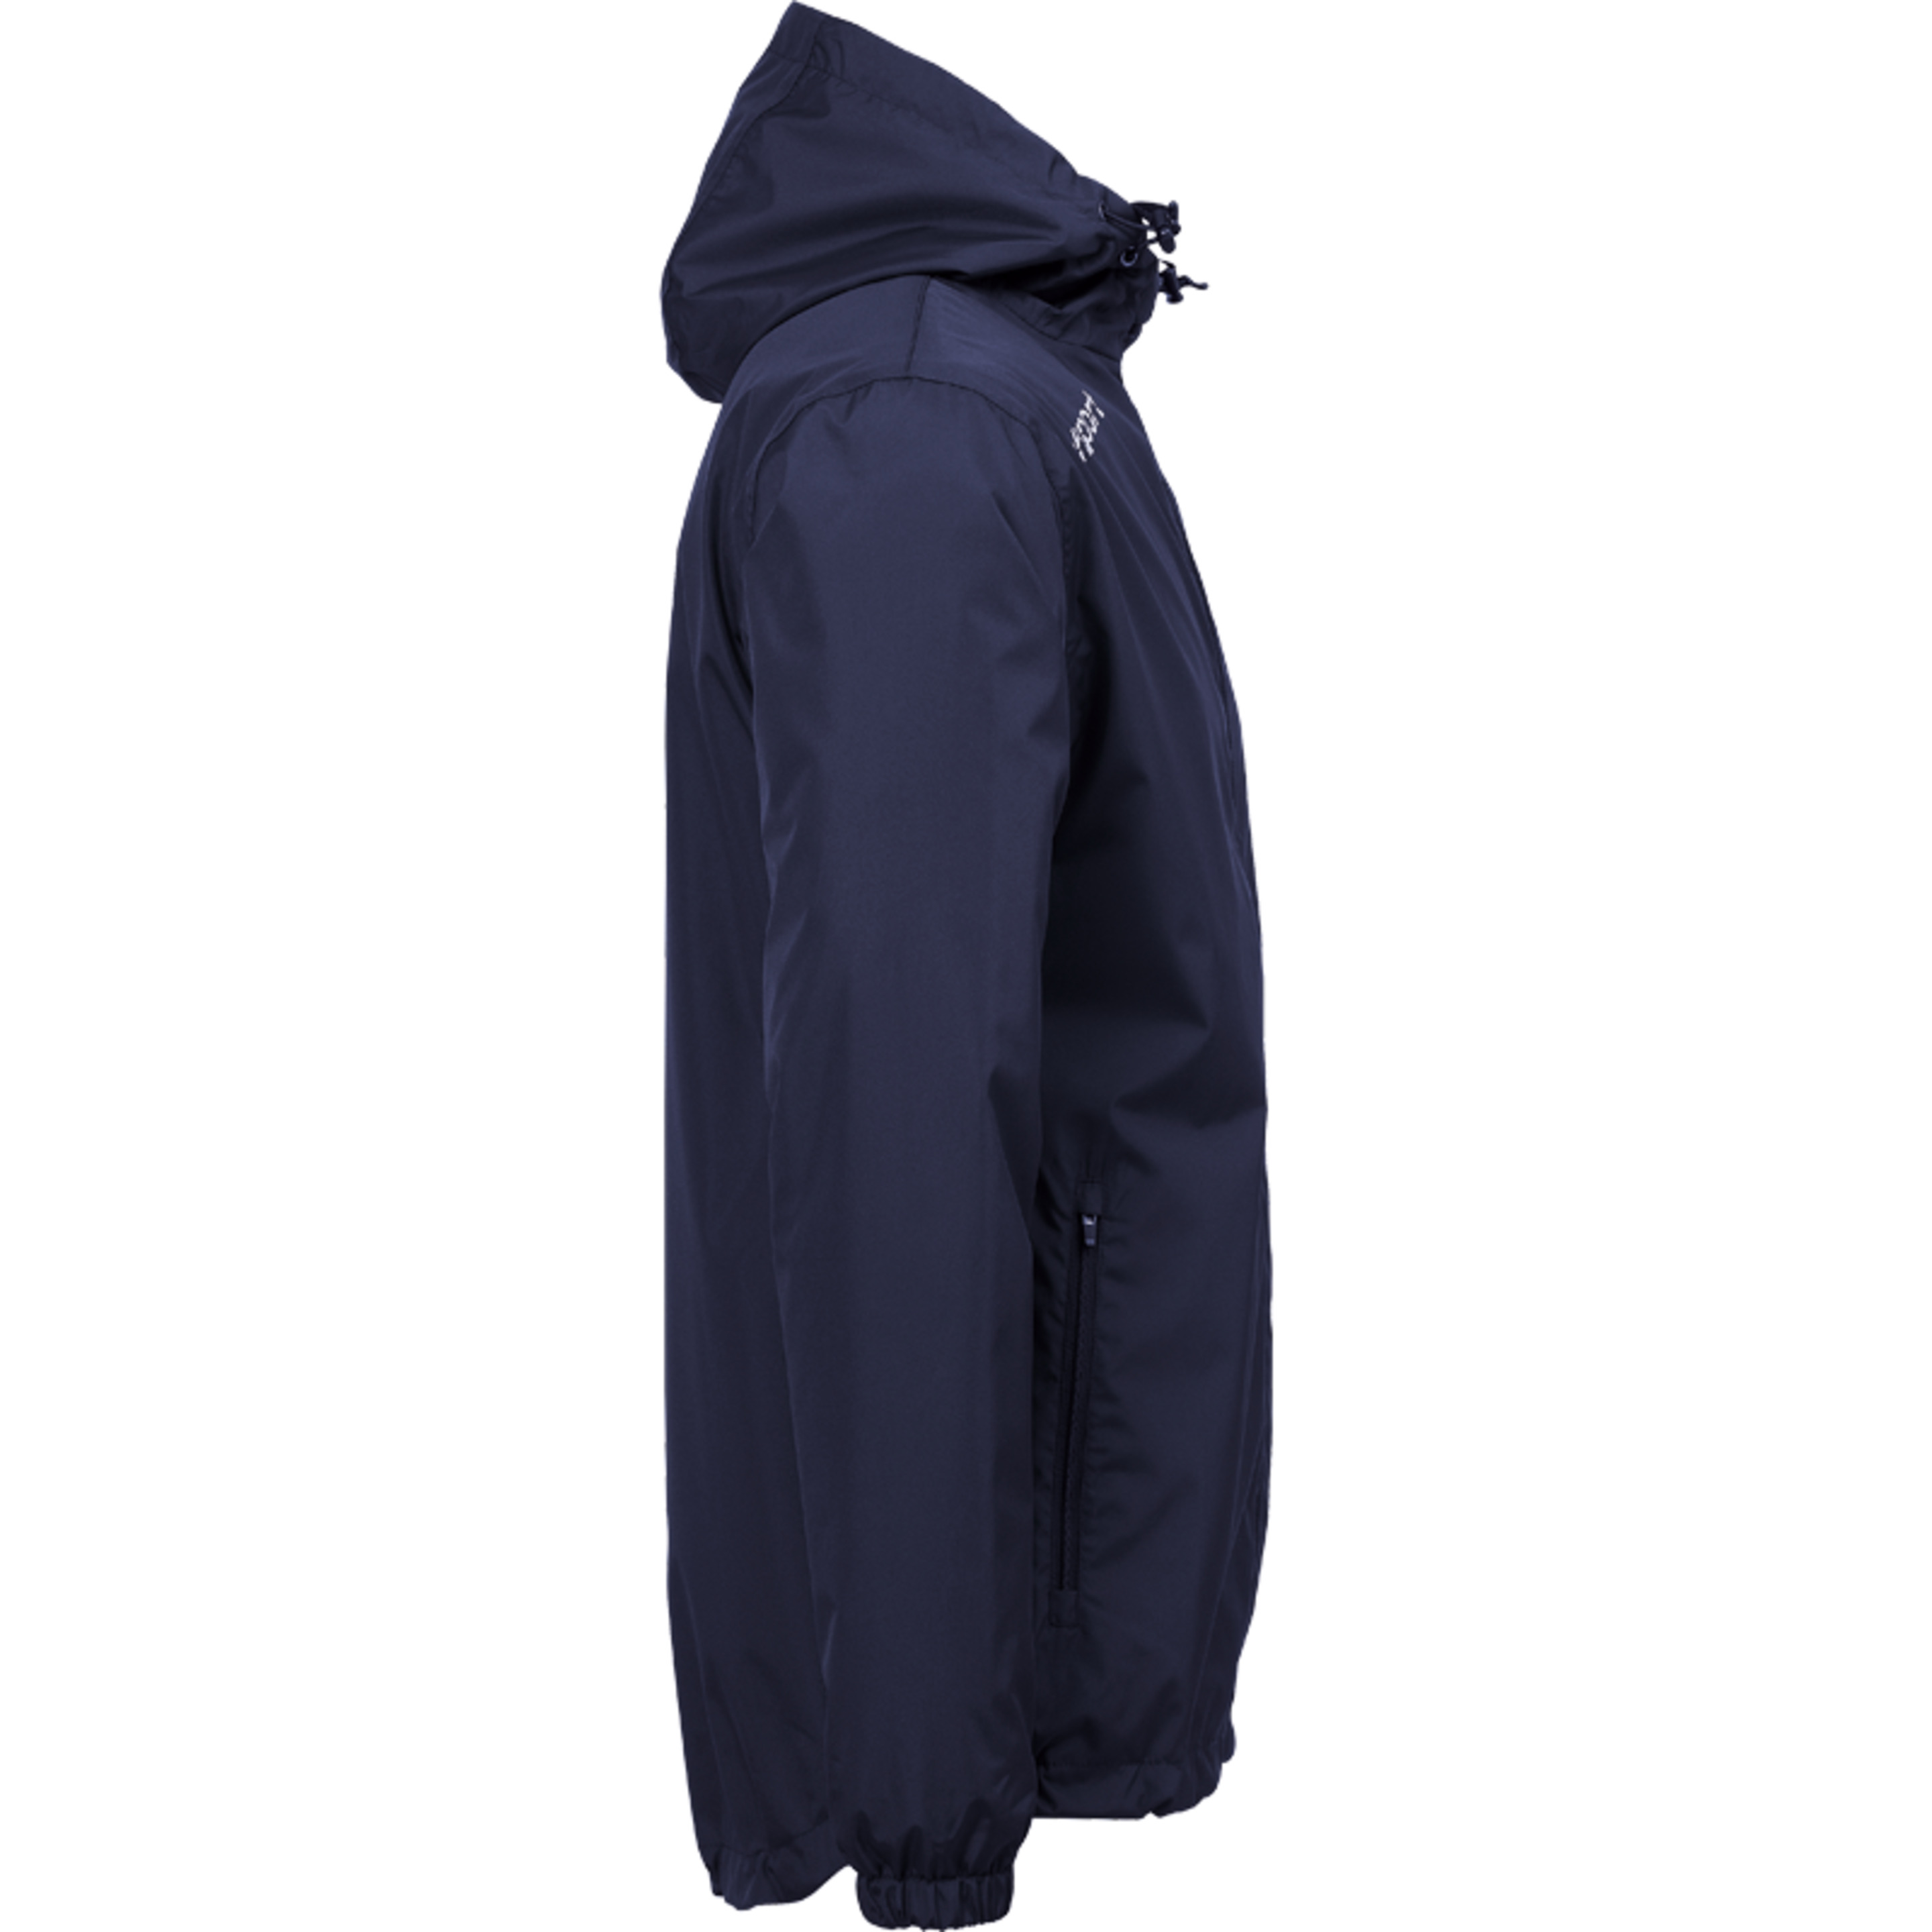 Essential Rain Jacket Azul Marino/blanco Uhlsport